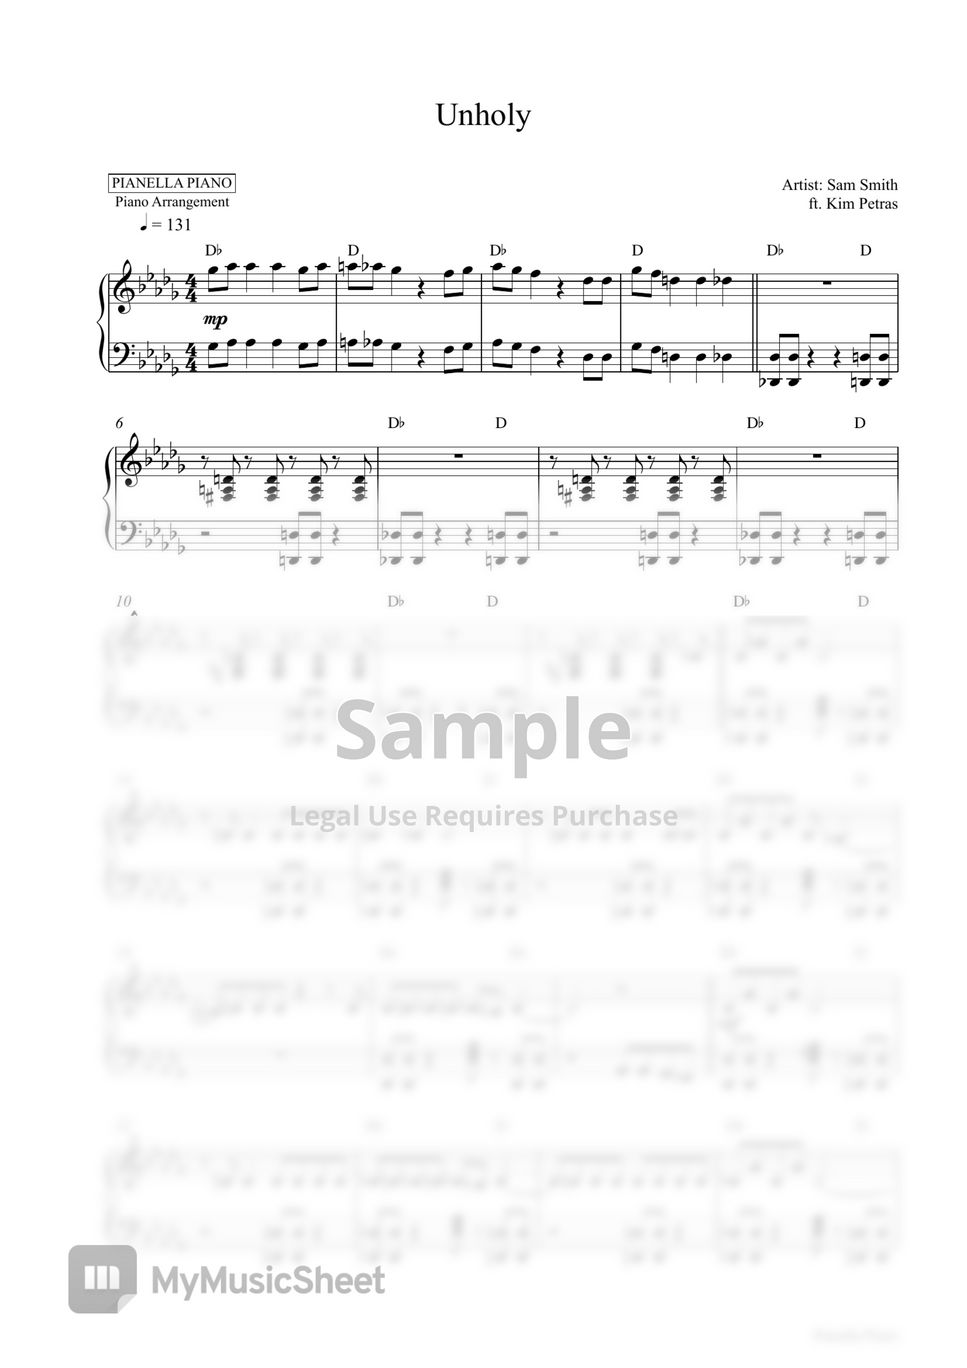 Sam Smith ft. Kim Petras - Unholy (Piano Sheet) by Pianella Piano